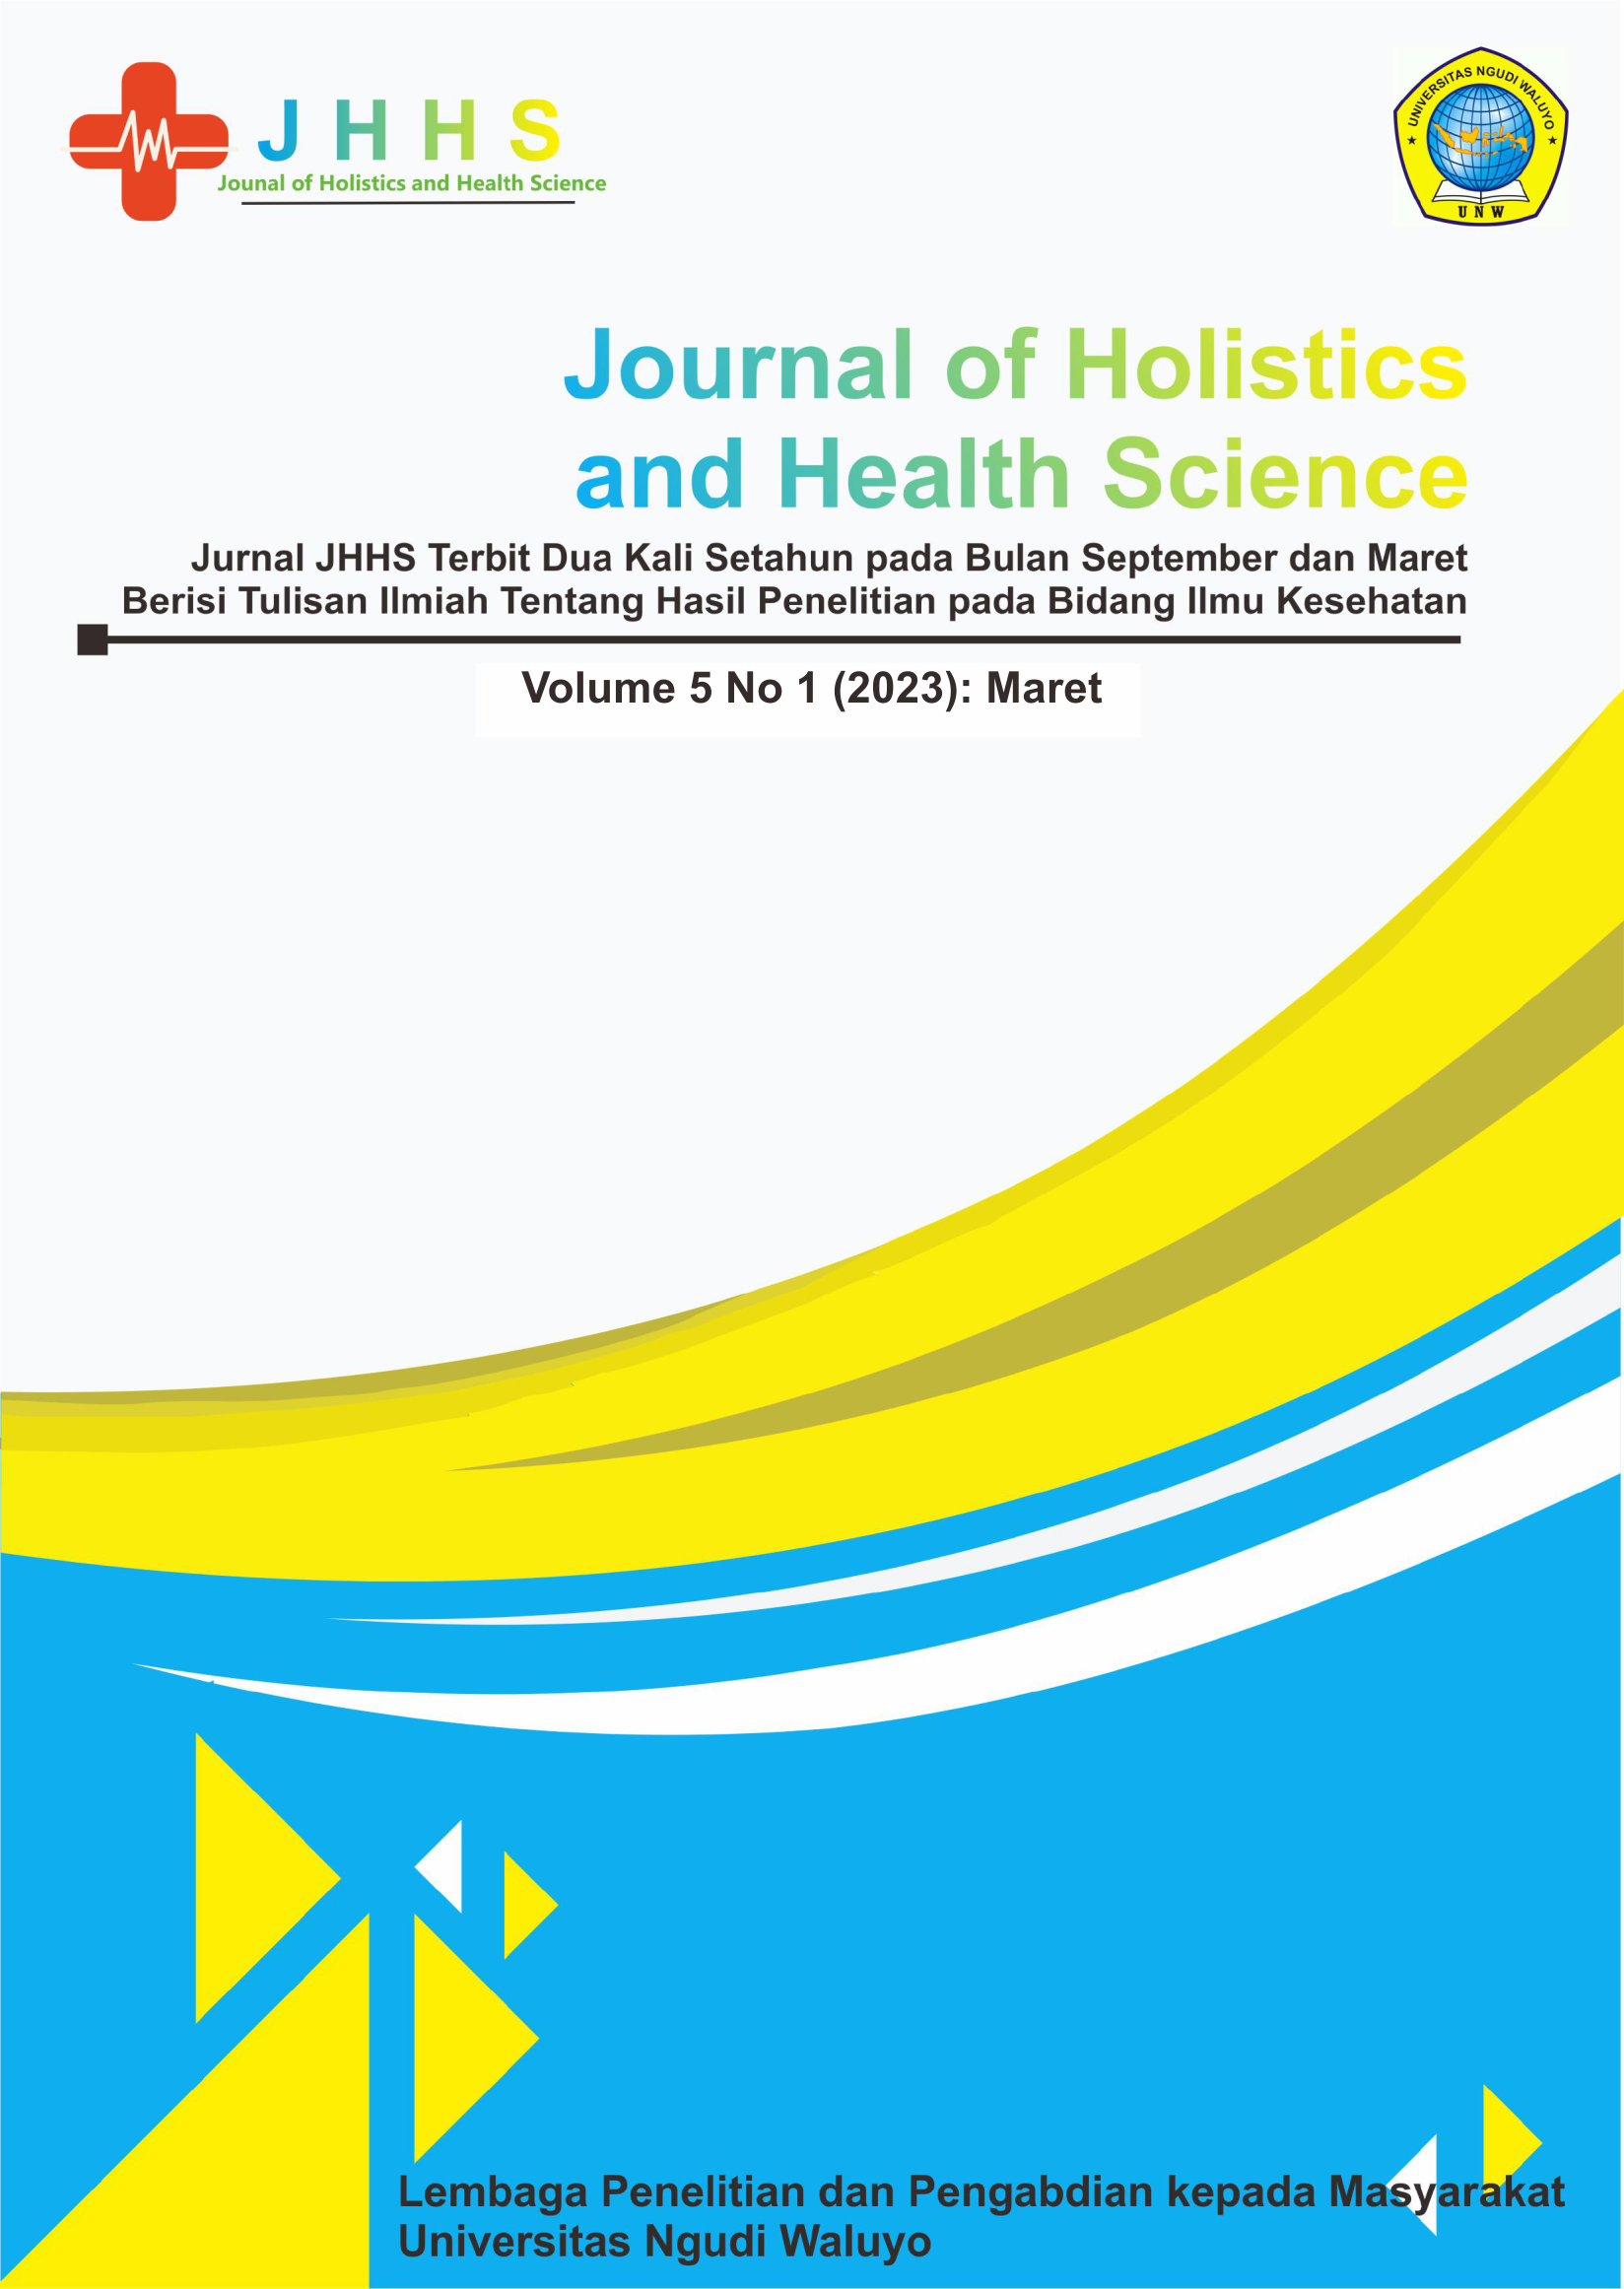 					View Vol. 5 No. 1 (2023): Journal of Holistics and Health Sciences (JHHS), Maret
				